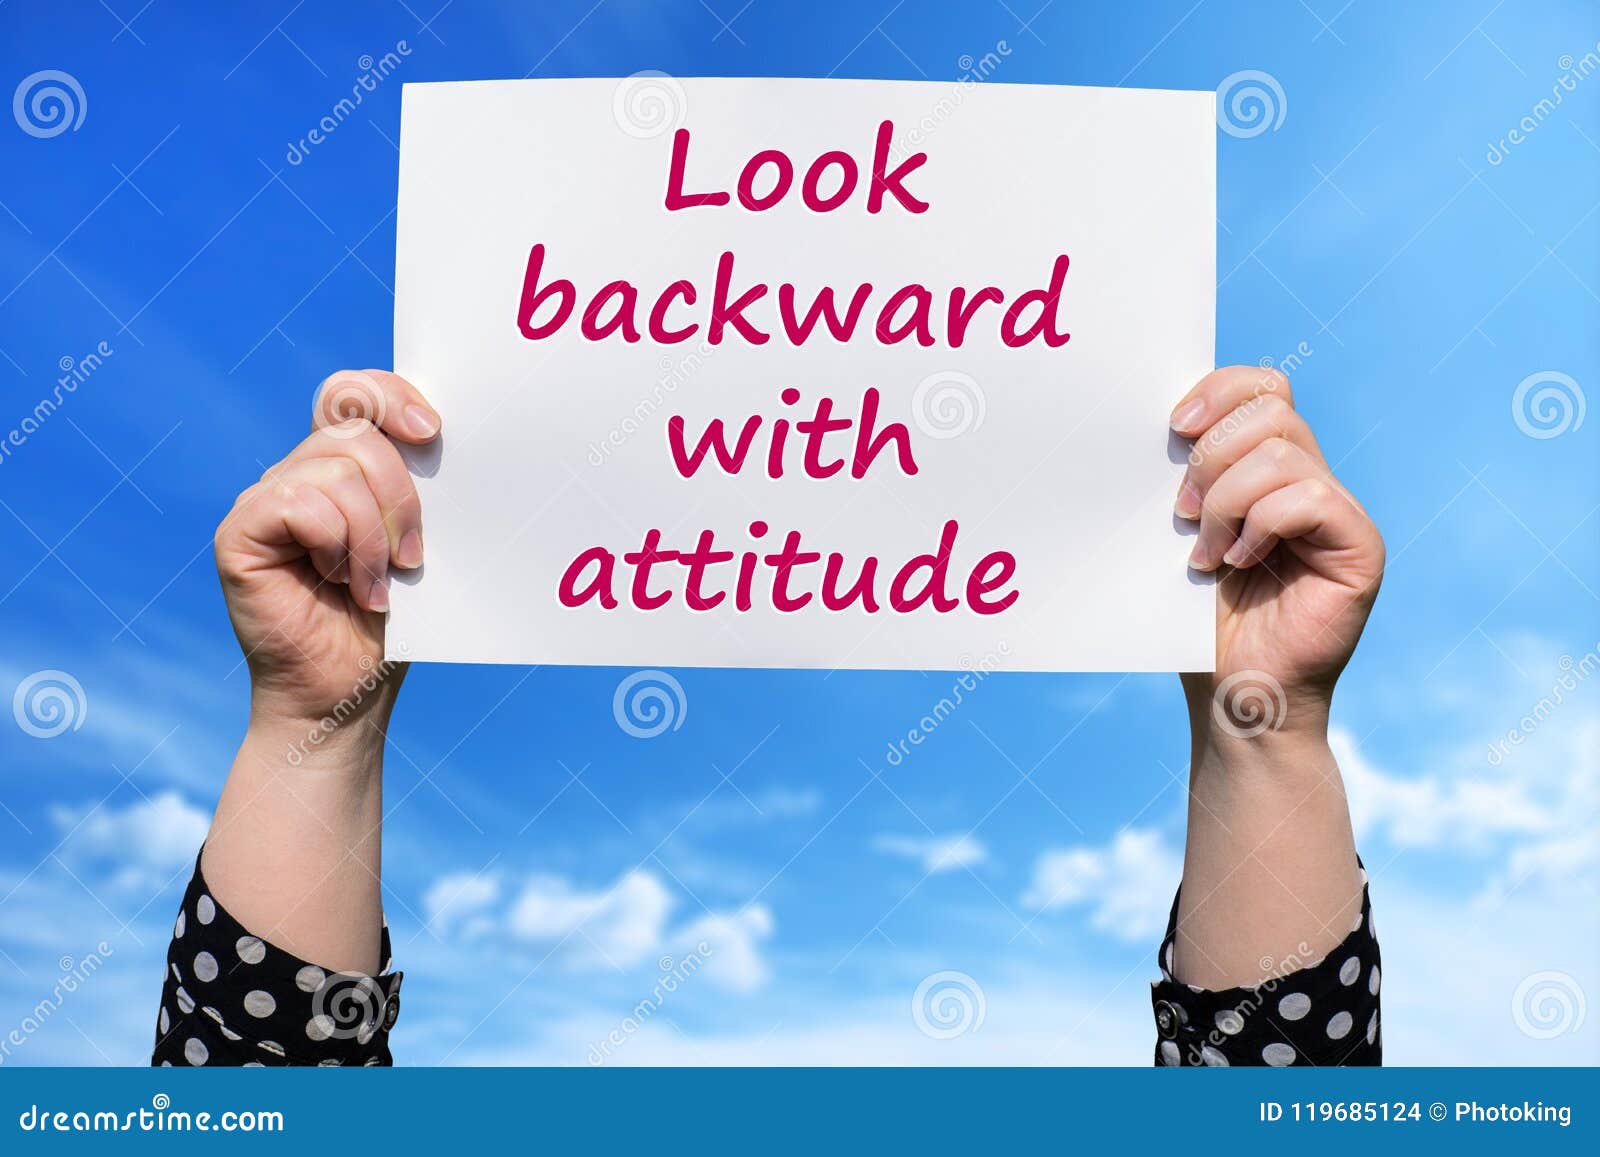 look backward with attitude